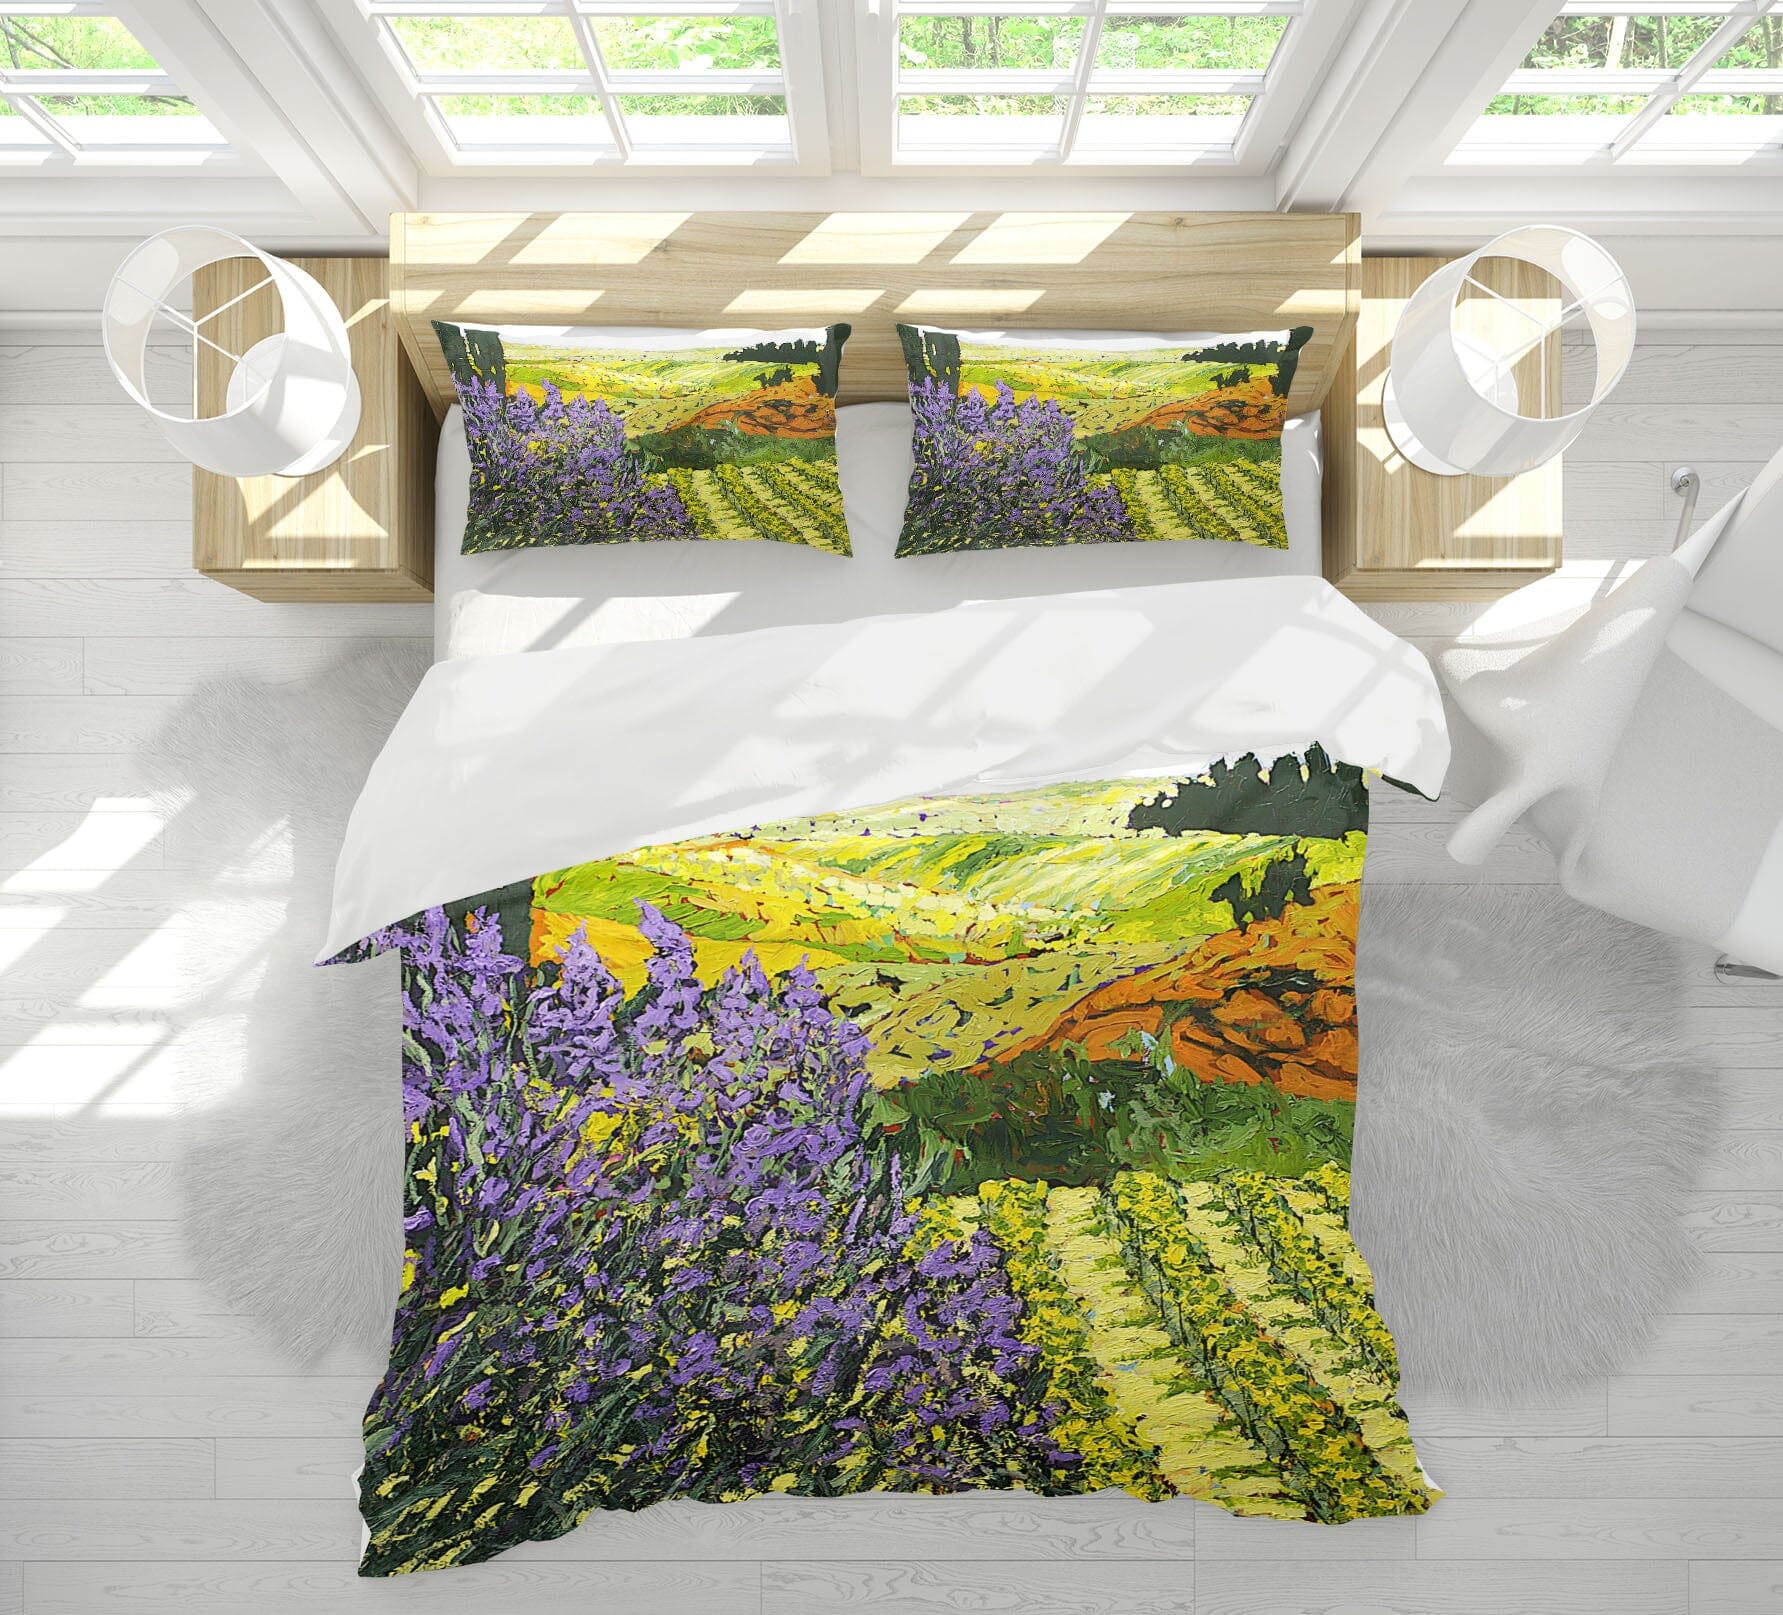 3D Lavender Field 2119 Allan P. Friedlander Bedding Bed Pillowcases Quilt Quiet Covers AJ Creativity Home 